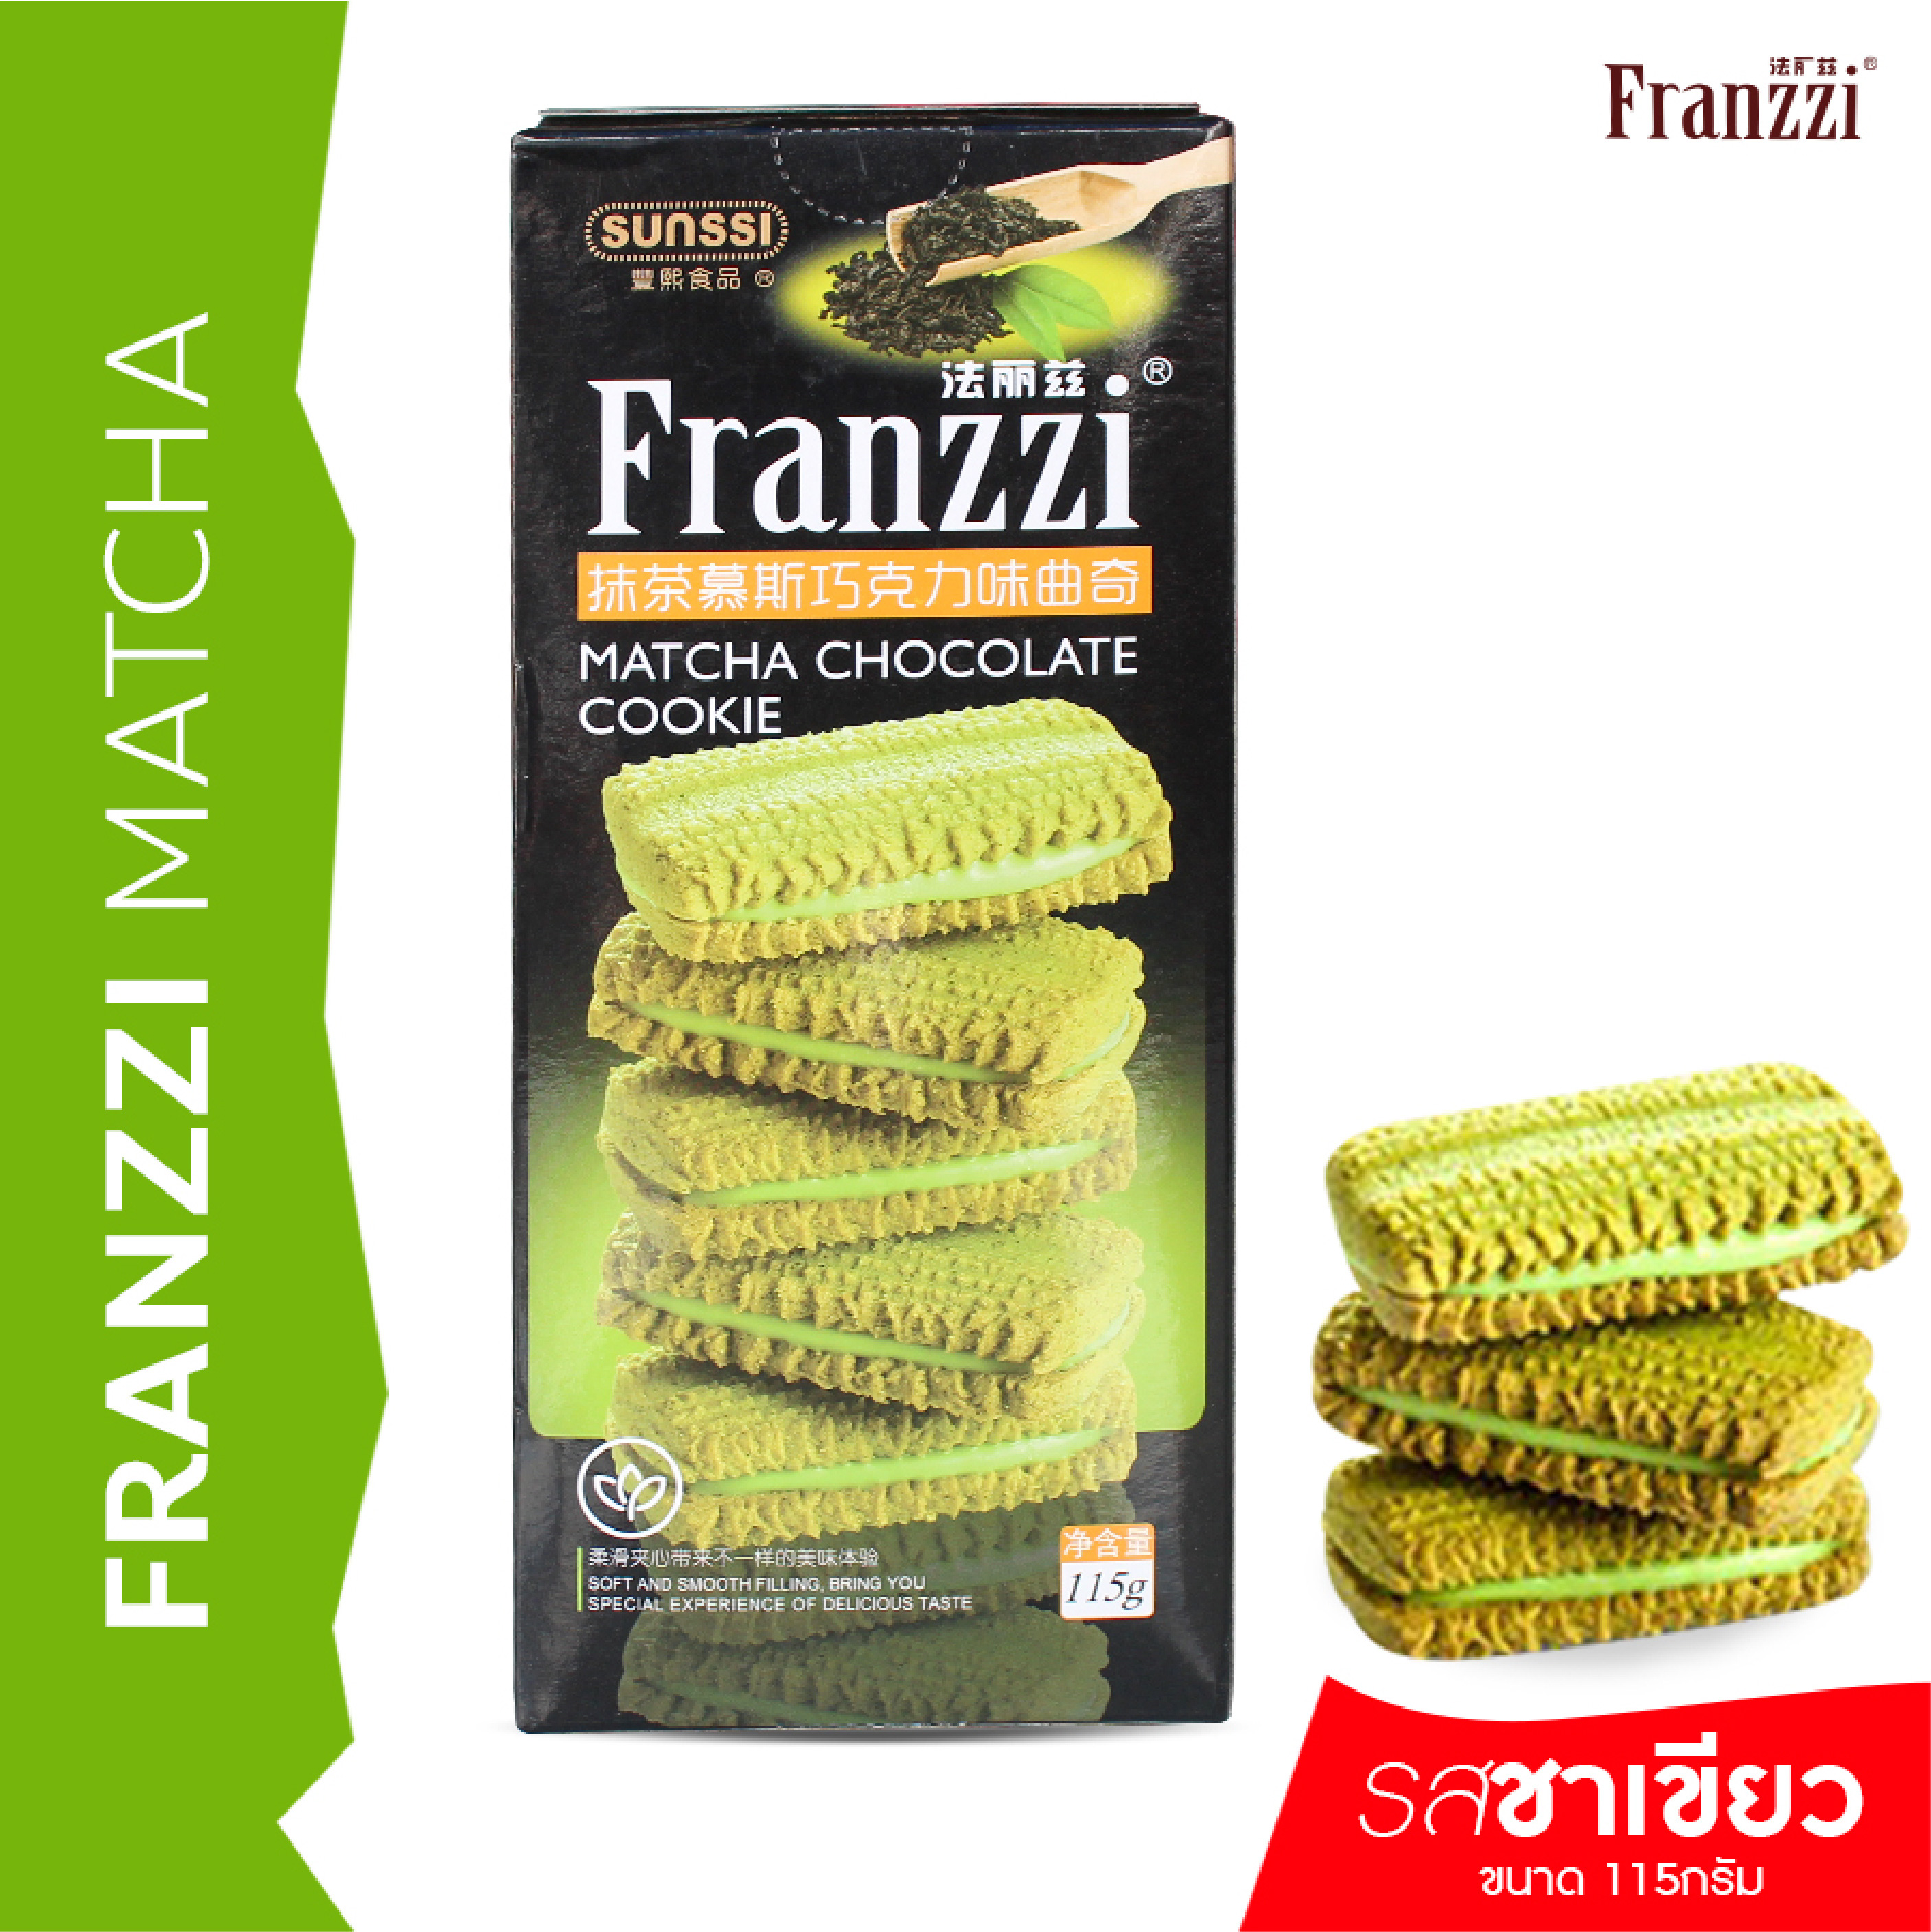 FRANZZI ขนาด 115 กรัม ไฉไล อินเตอร์เทรด บริษัทนำเข้าขนม